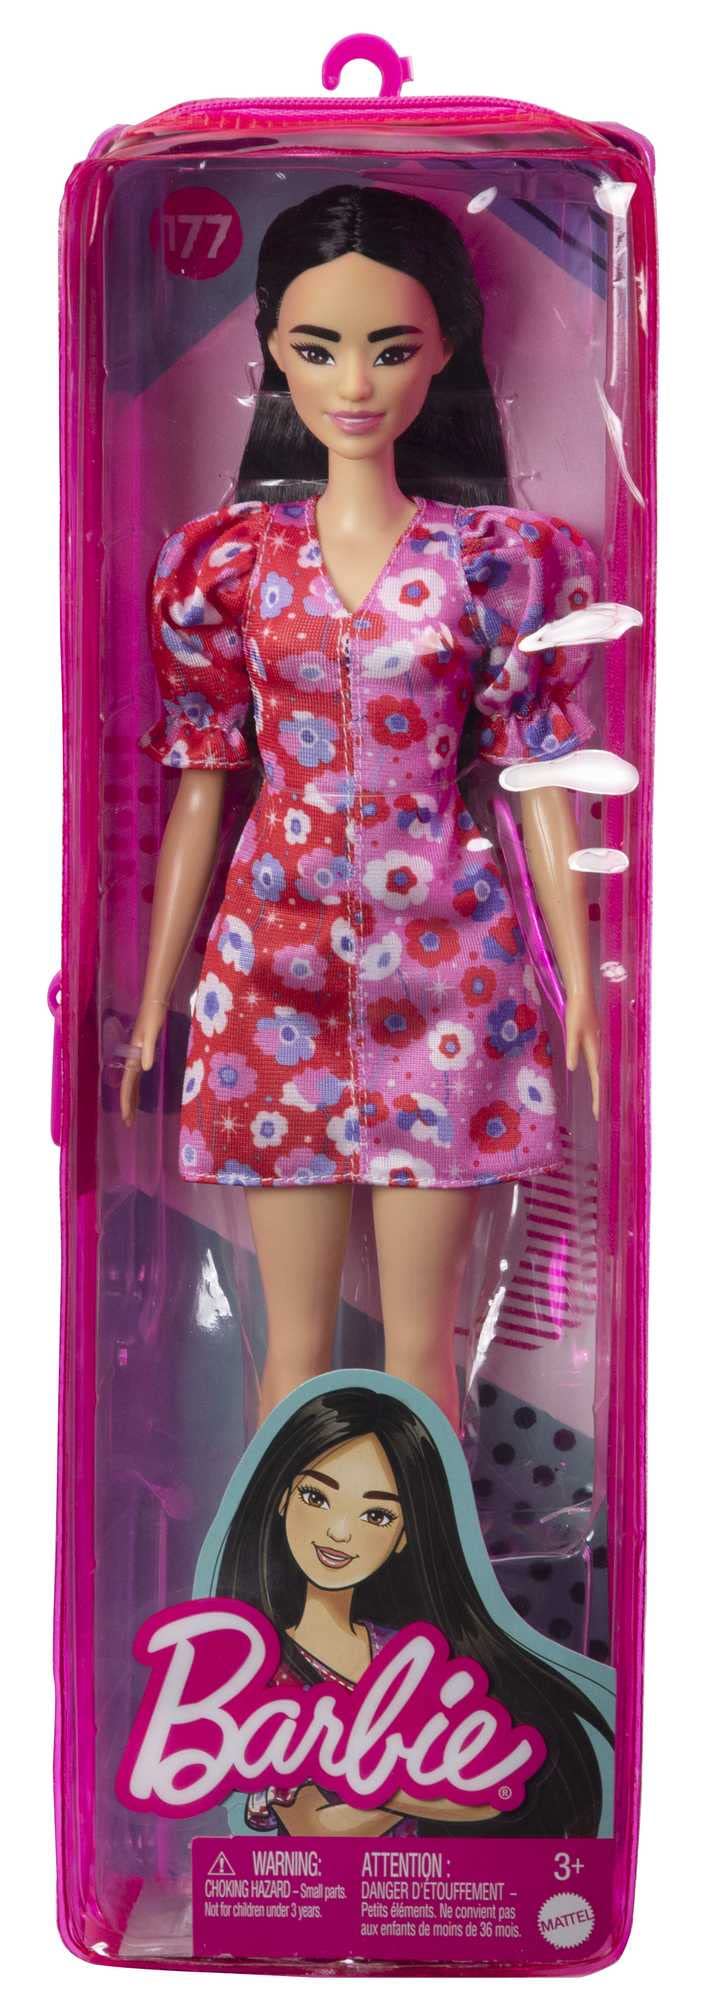 Barbie Fashionistas Doll with Long Black Hair